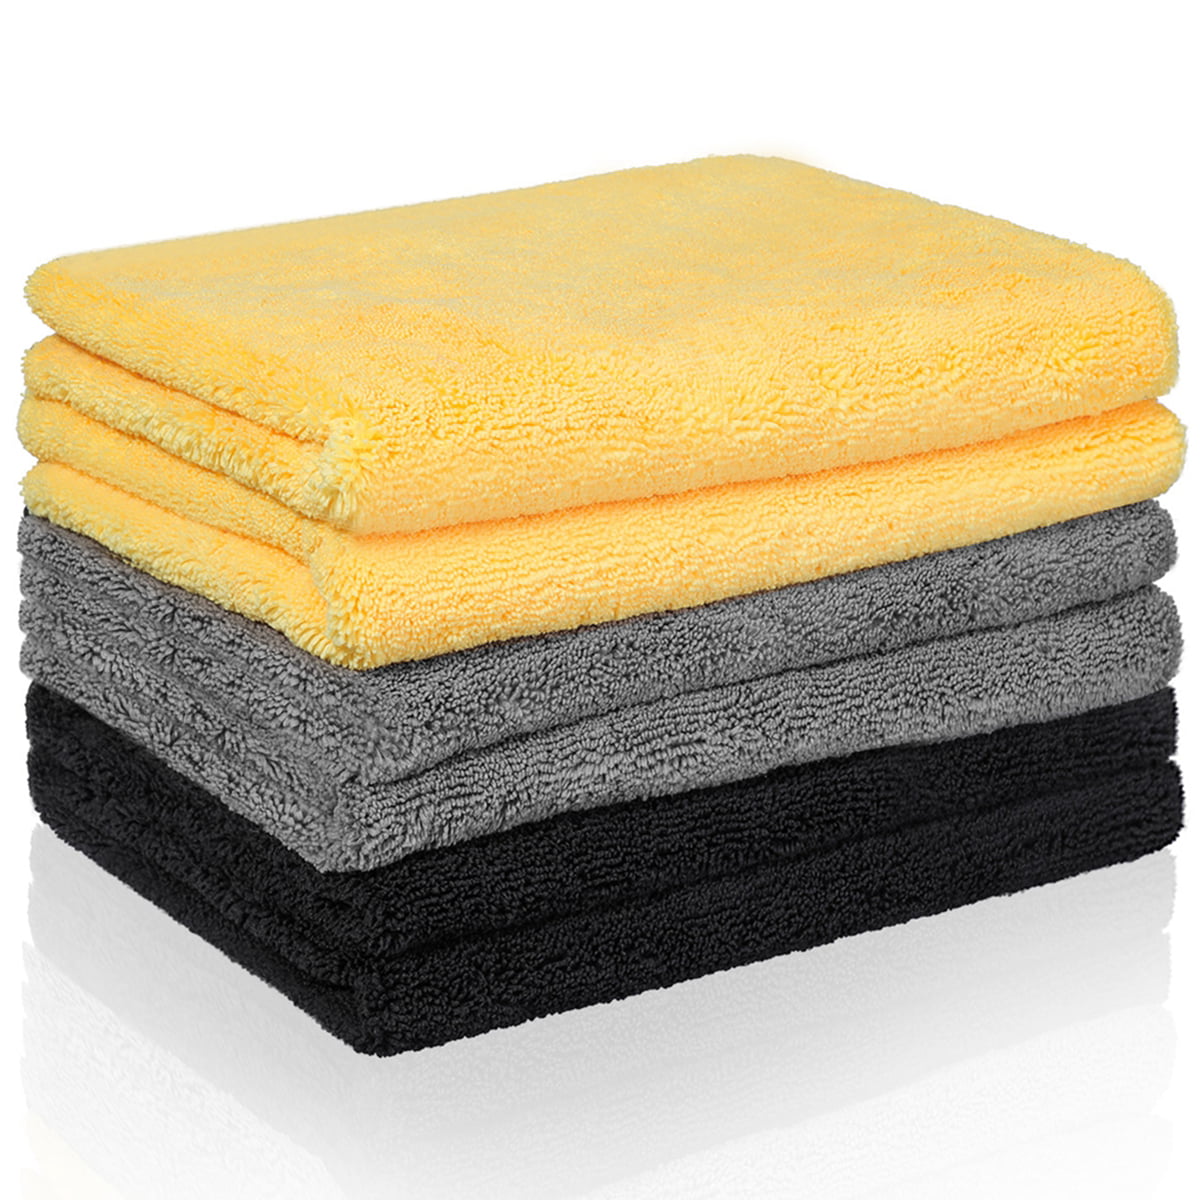 Dyllutrwhe Microfiber Towel Soft Water Absorption Car Vehicle Washing Cloth Towel Cleaning Tool for Car 30x30cm 